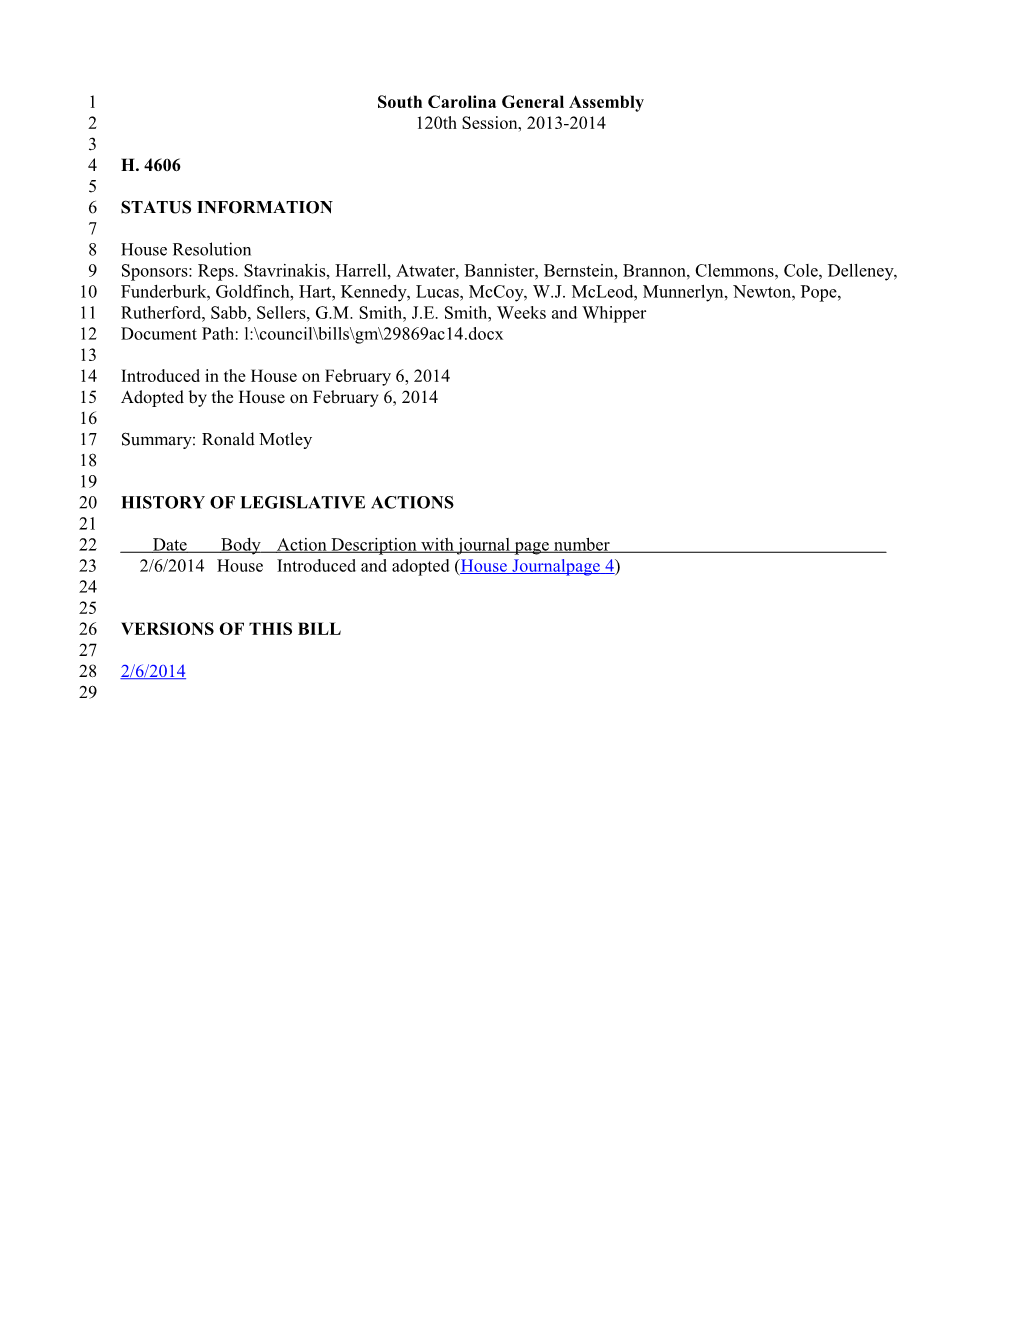 2013-2014 Bill 4606: Ronald Motley - South Carolina Legislature Online